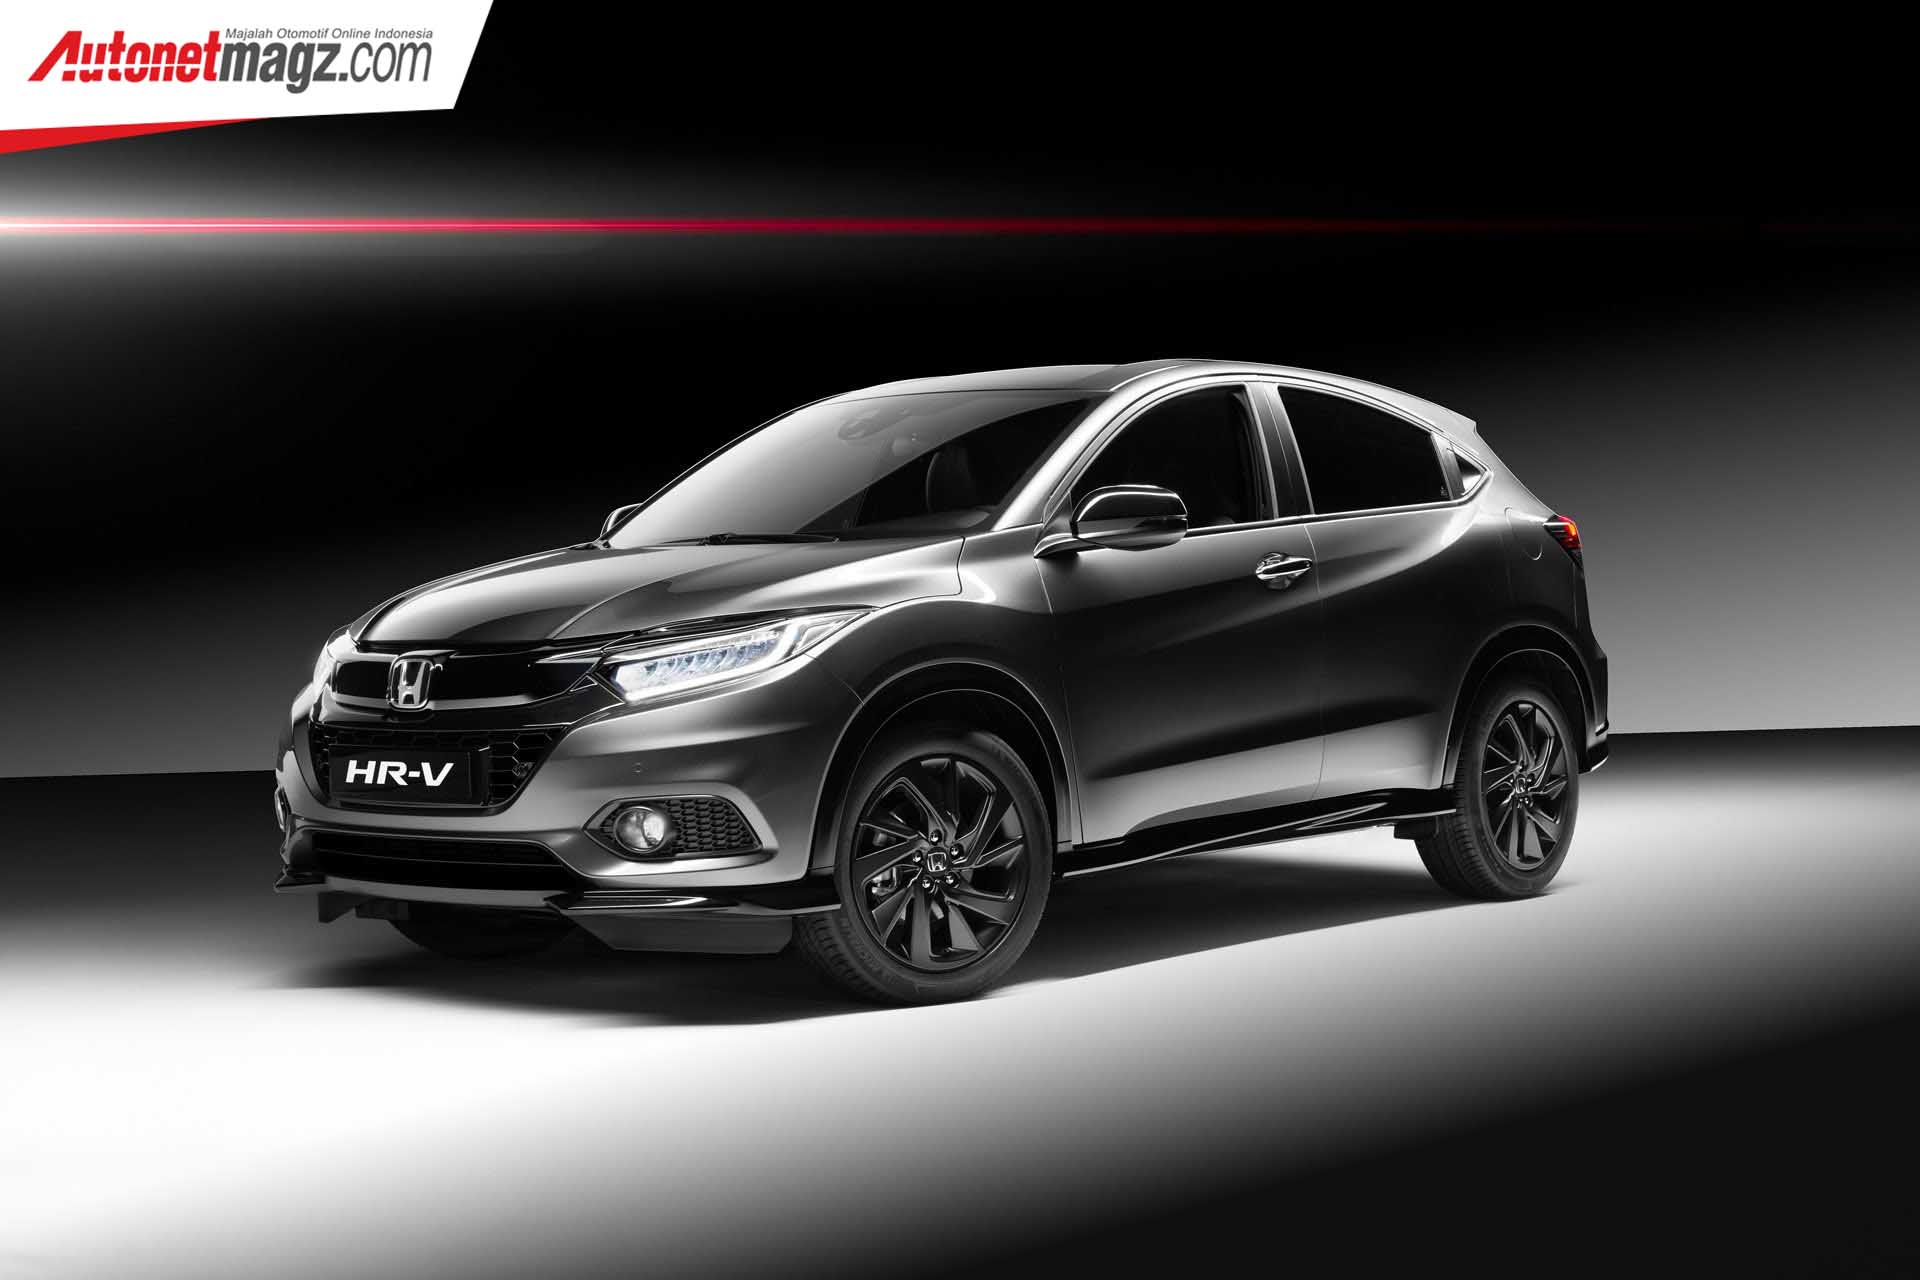 Berita, Honda HR-V Sport depan: Honda HR-V Sport Dirilis, Pakai Mesin Turbo & Transmisi Manual